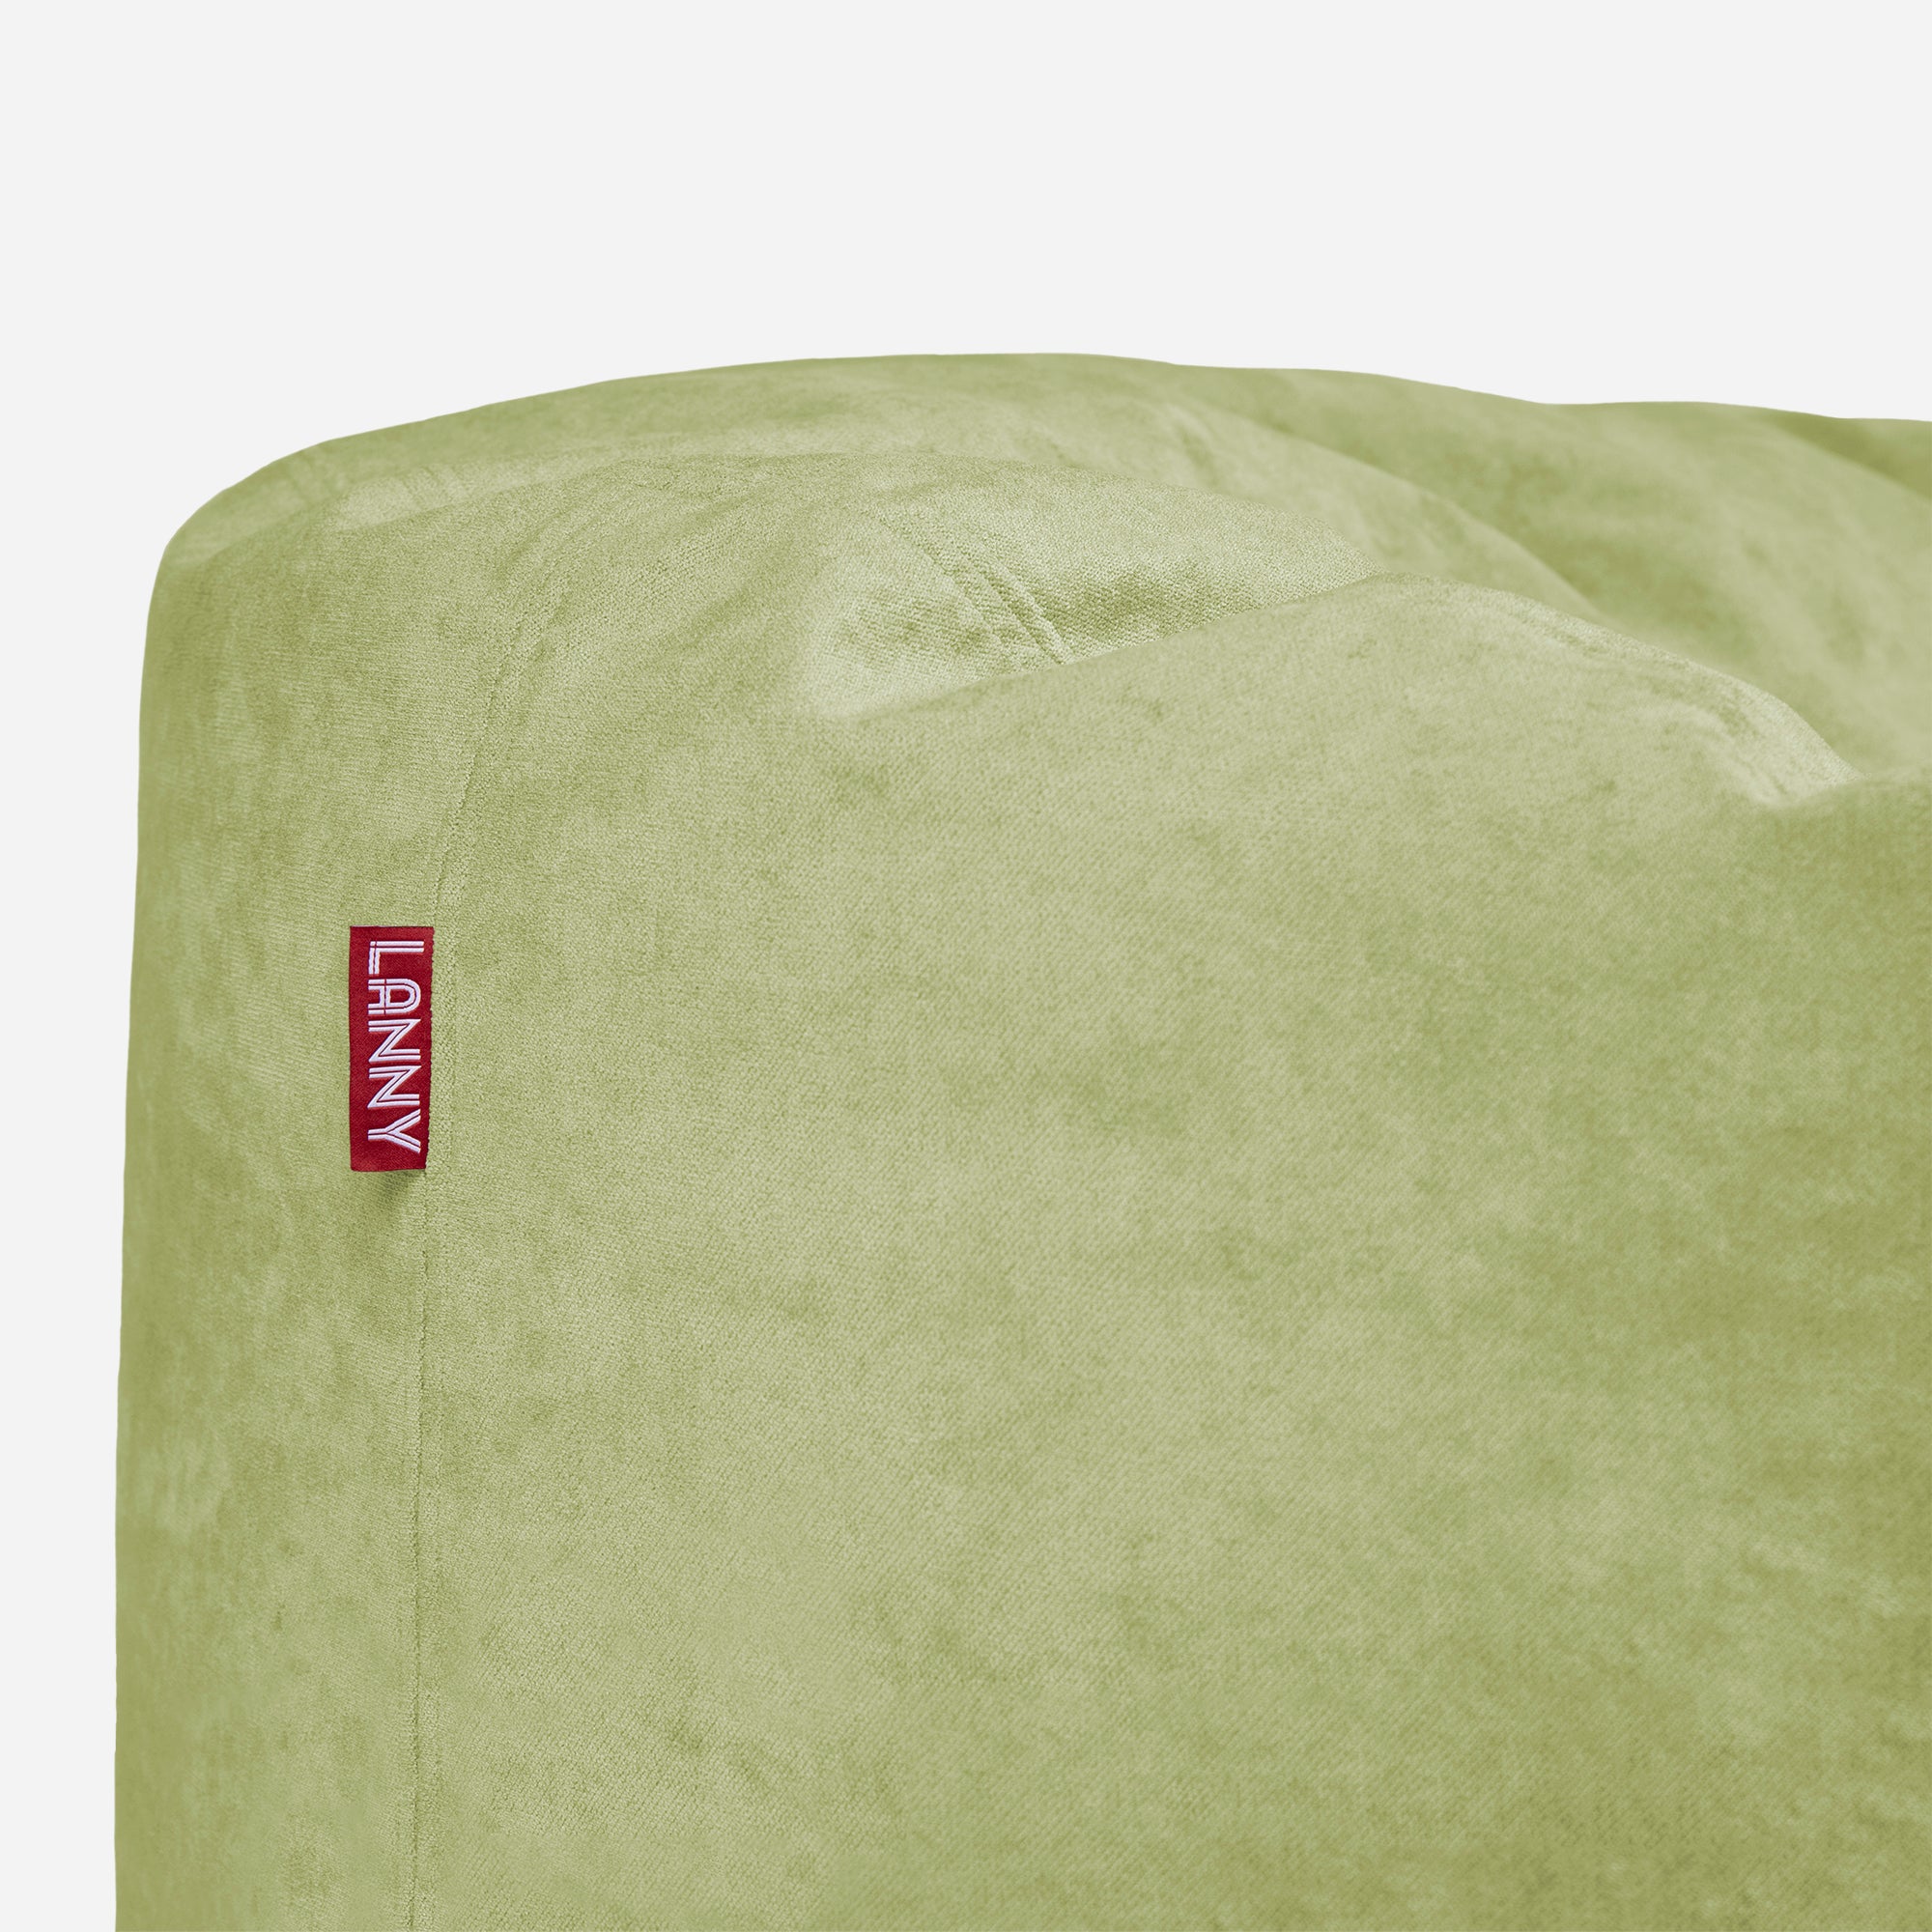 Large Original Aldo Lime Bean Bag